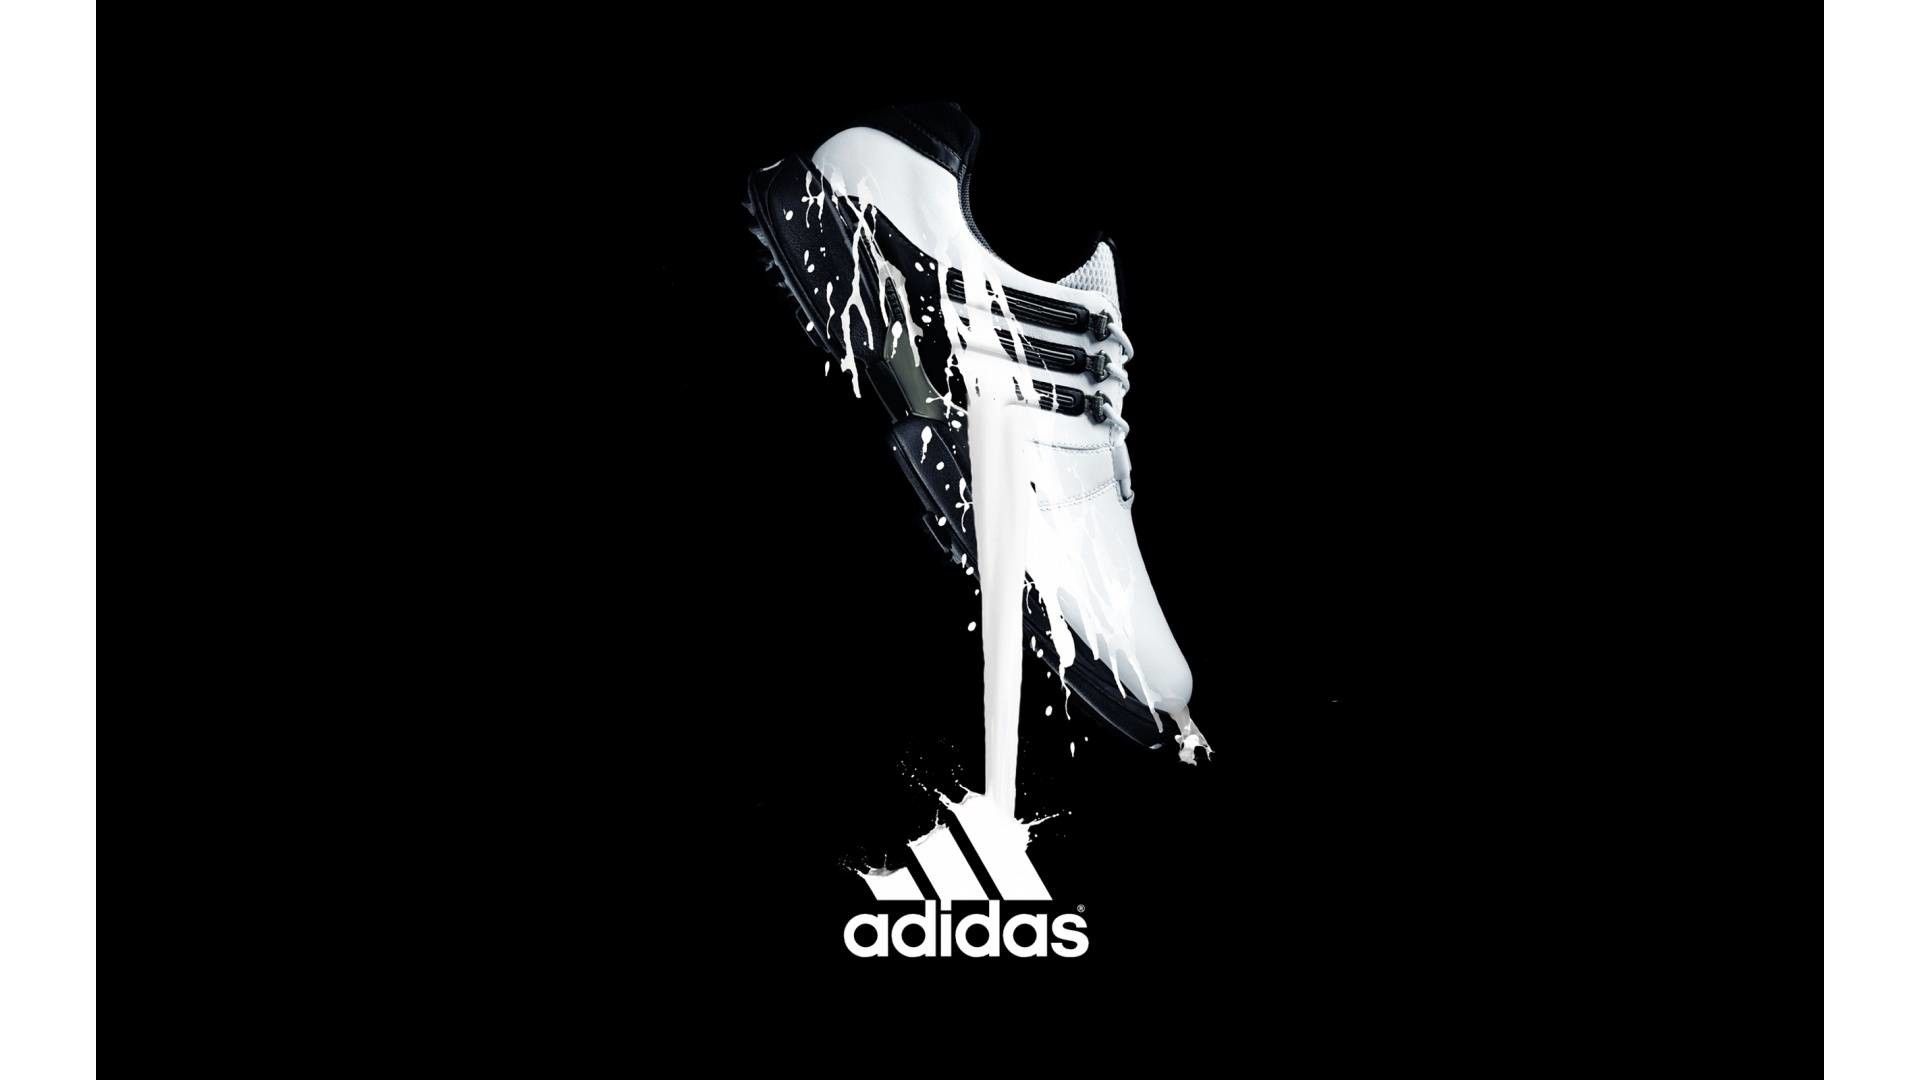 Adidas Soccer Cleats Wallpaper